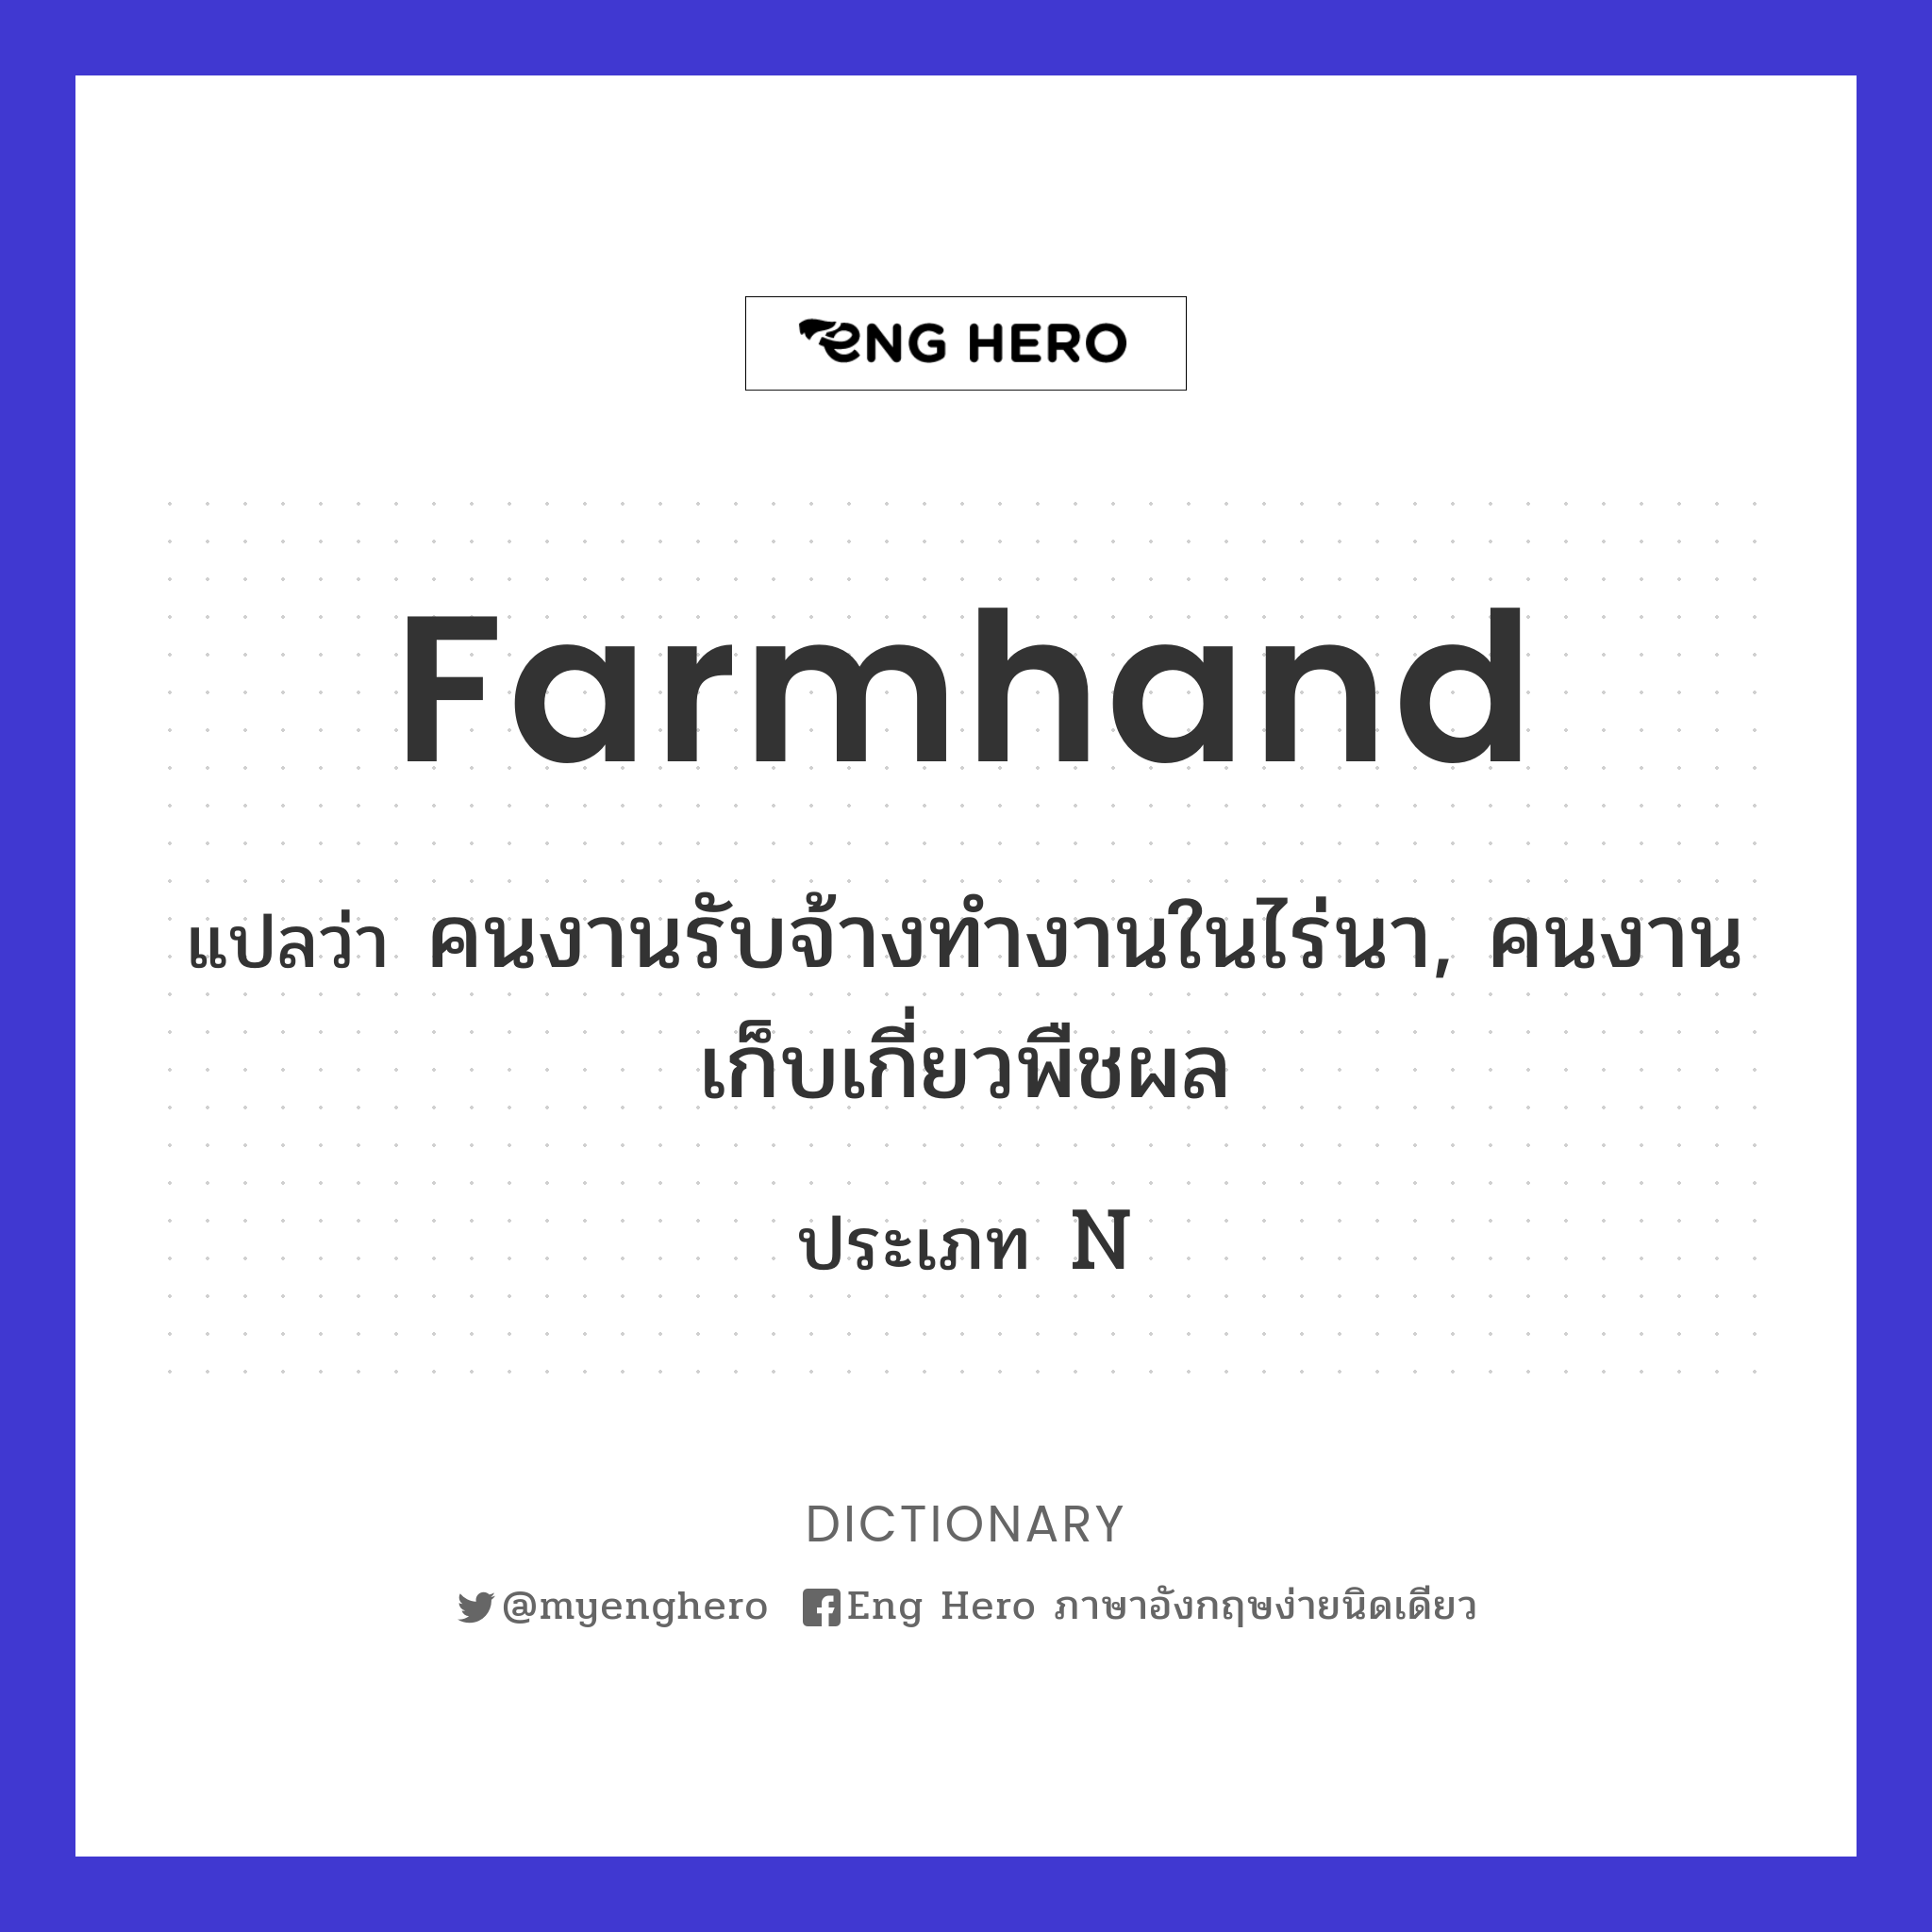 farmhand